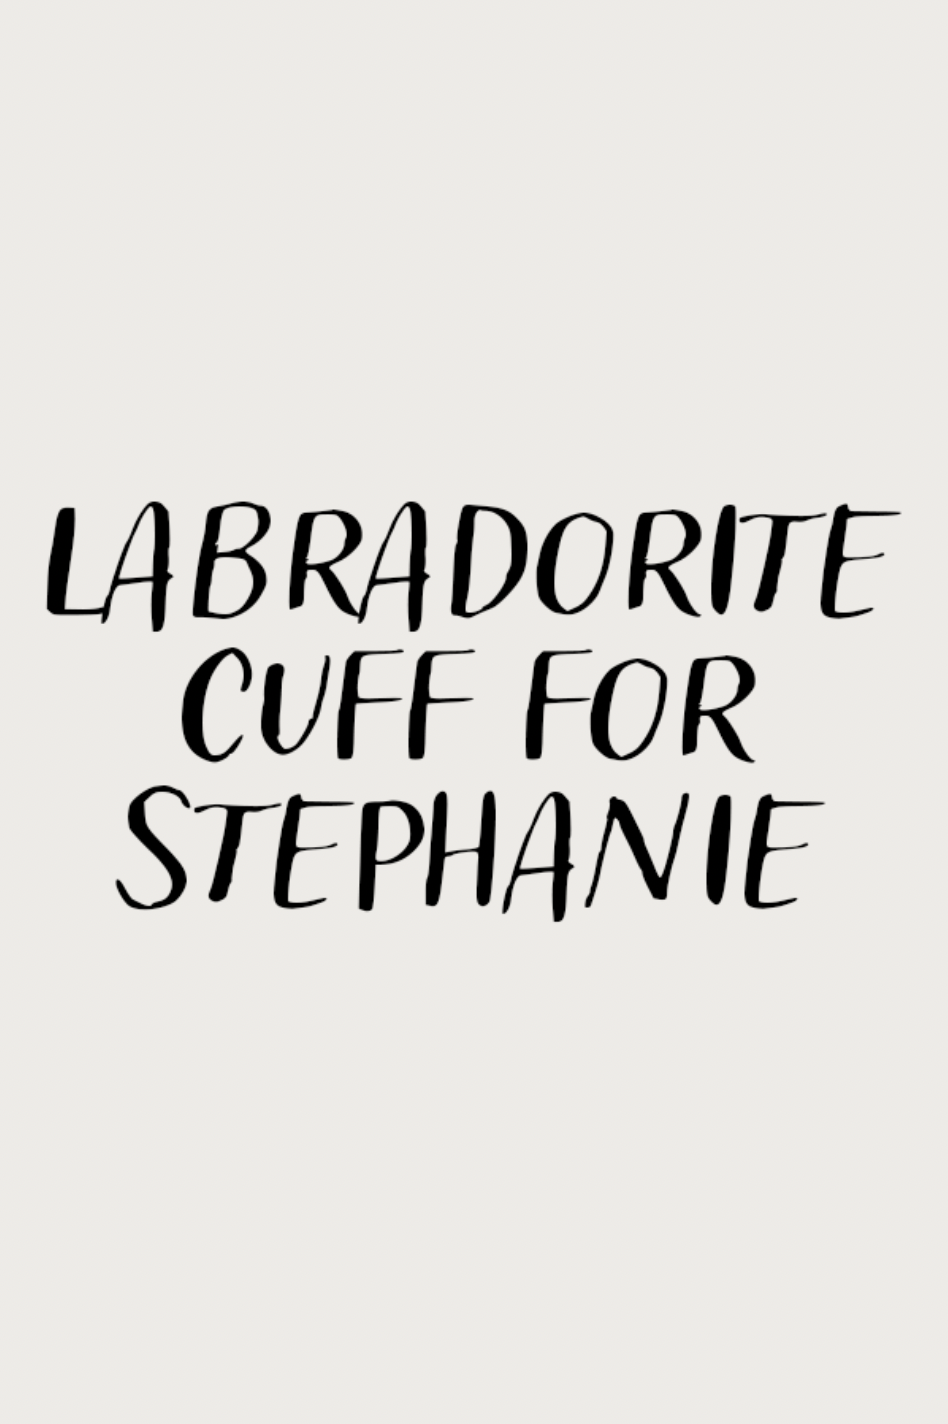 Labradorite Cuff for Stephanie